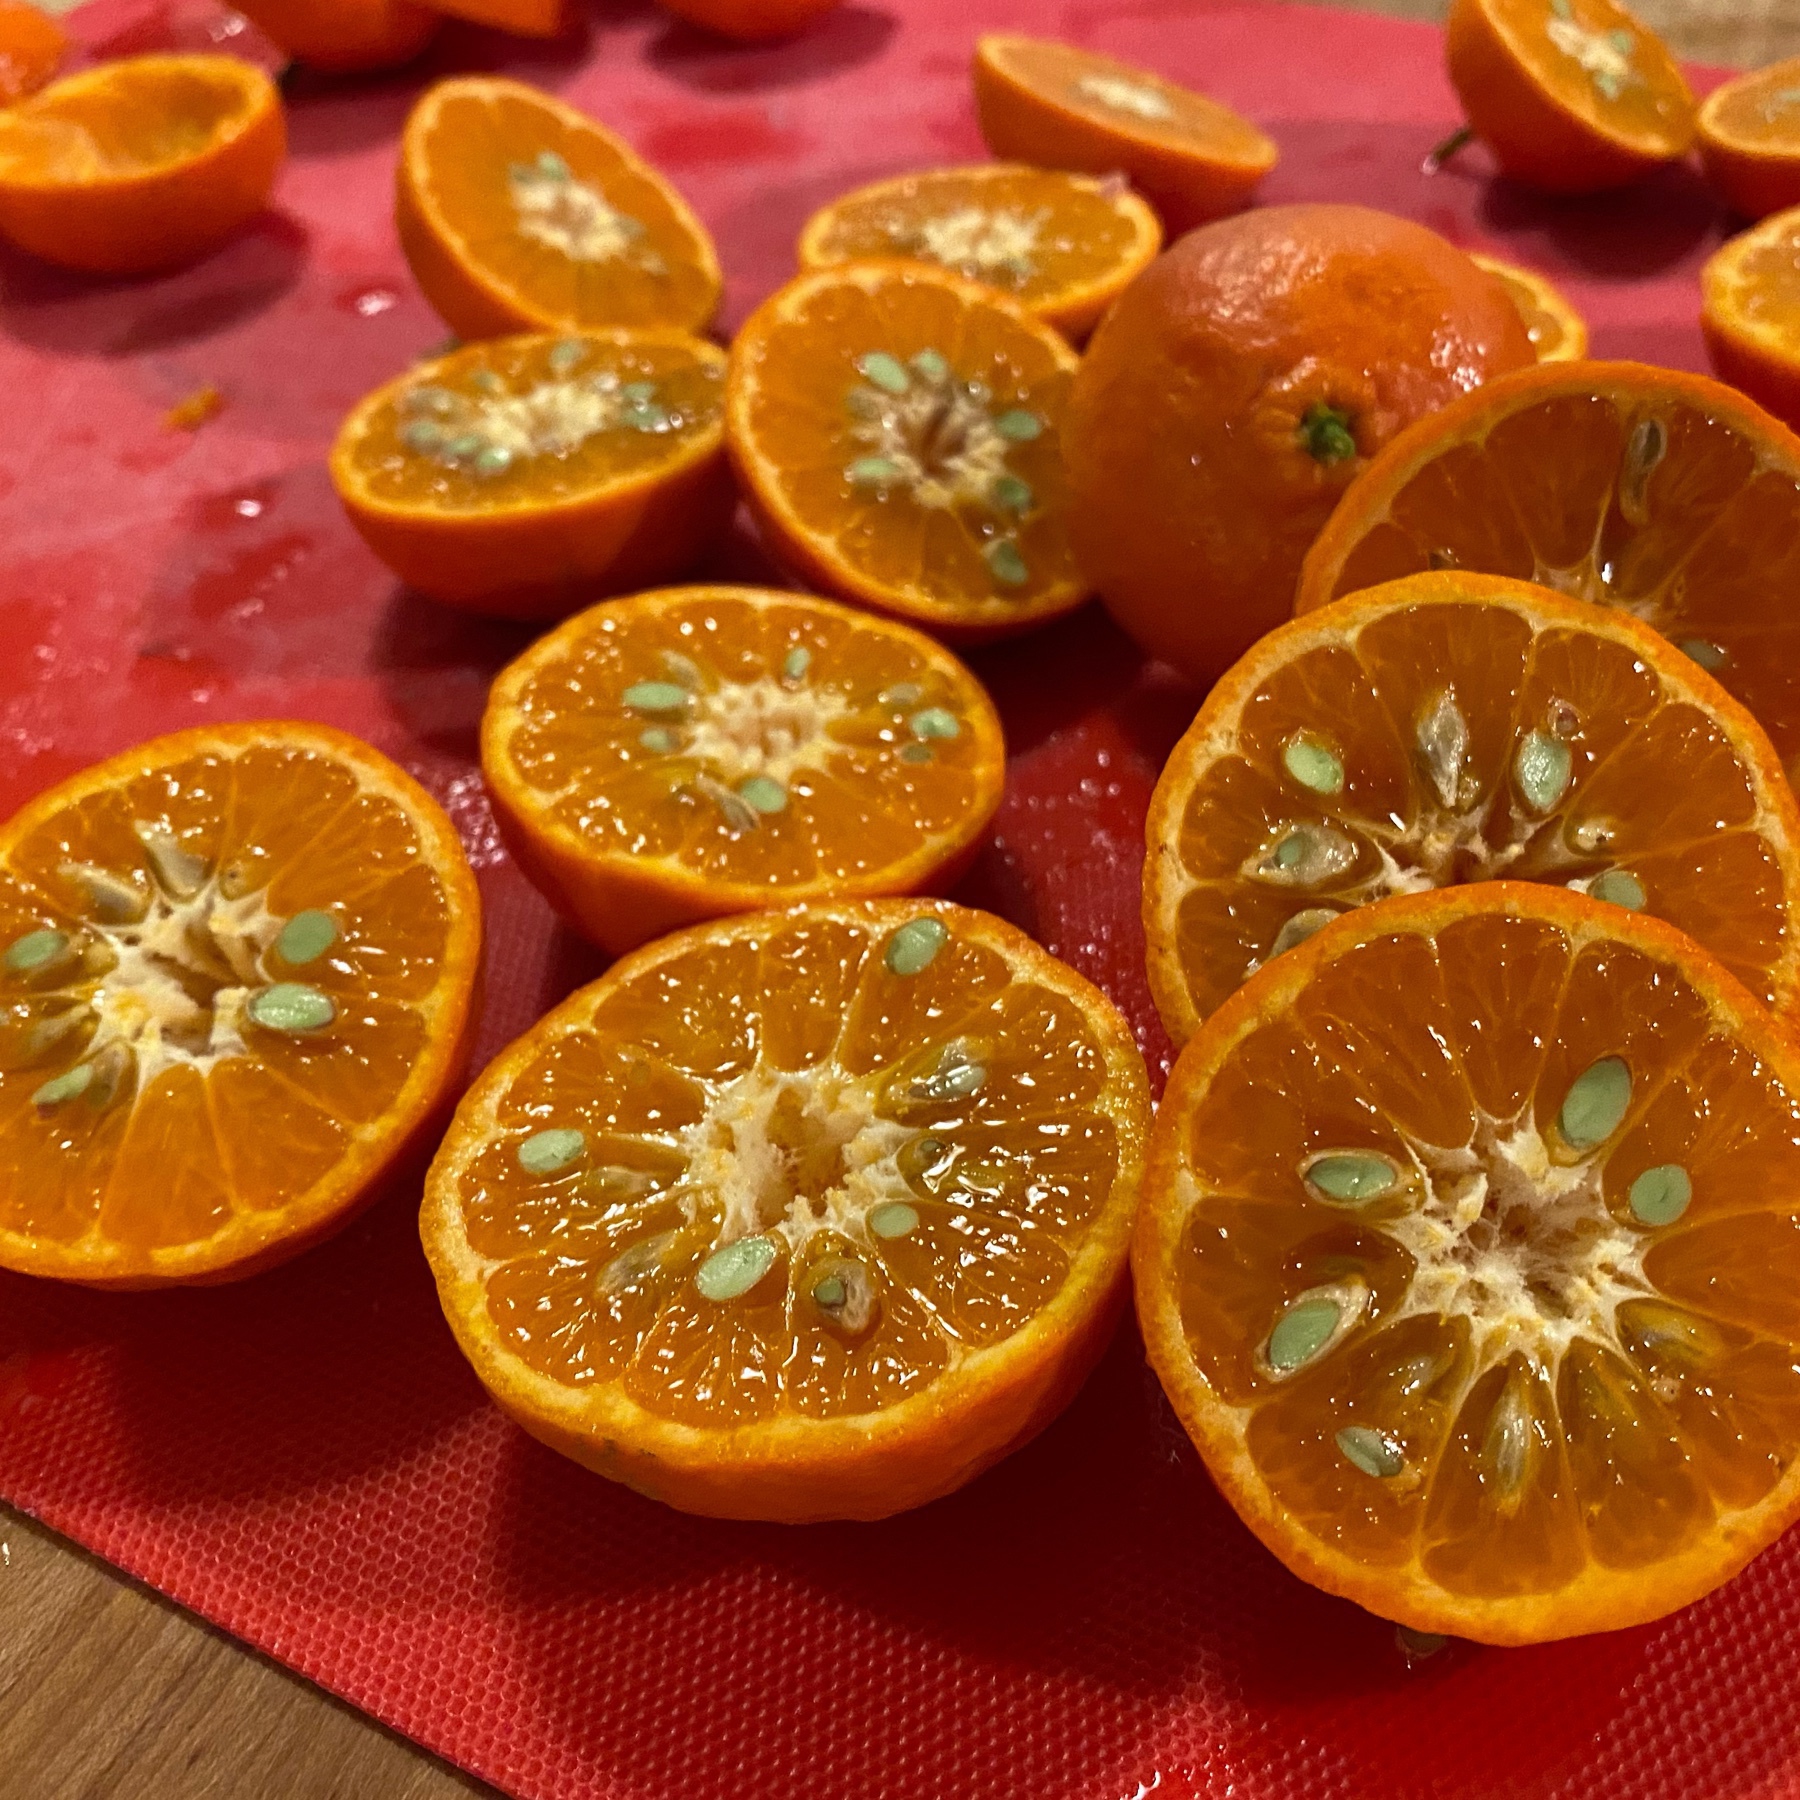 mandarins cut in half. they're very seedy.